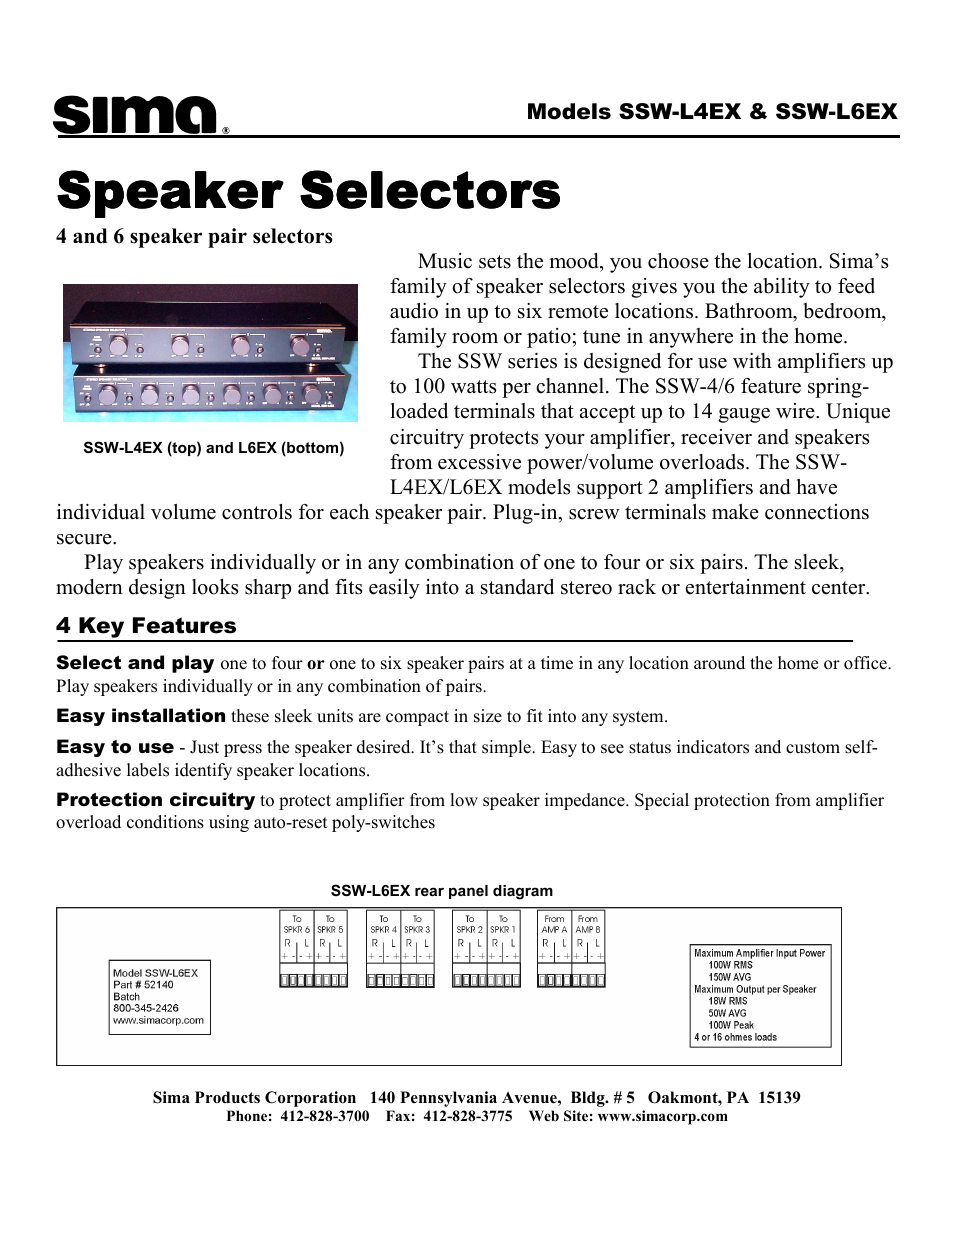 Speaker Selectors SSW-L4EX